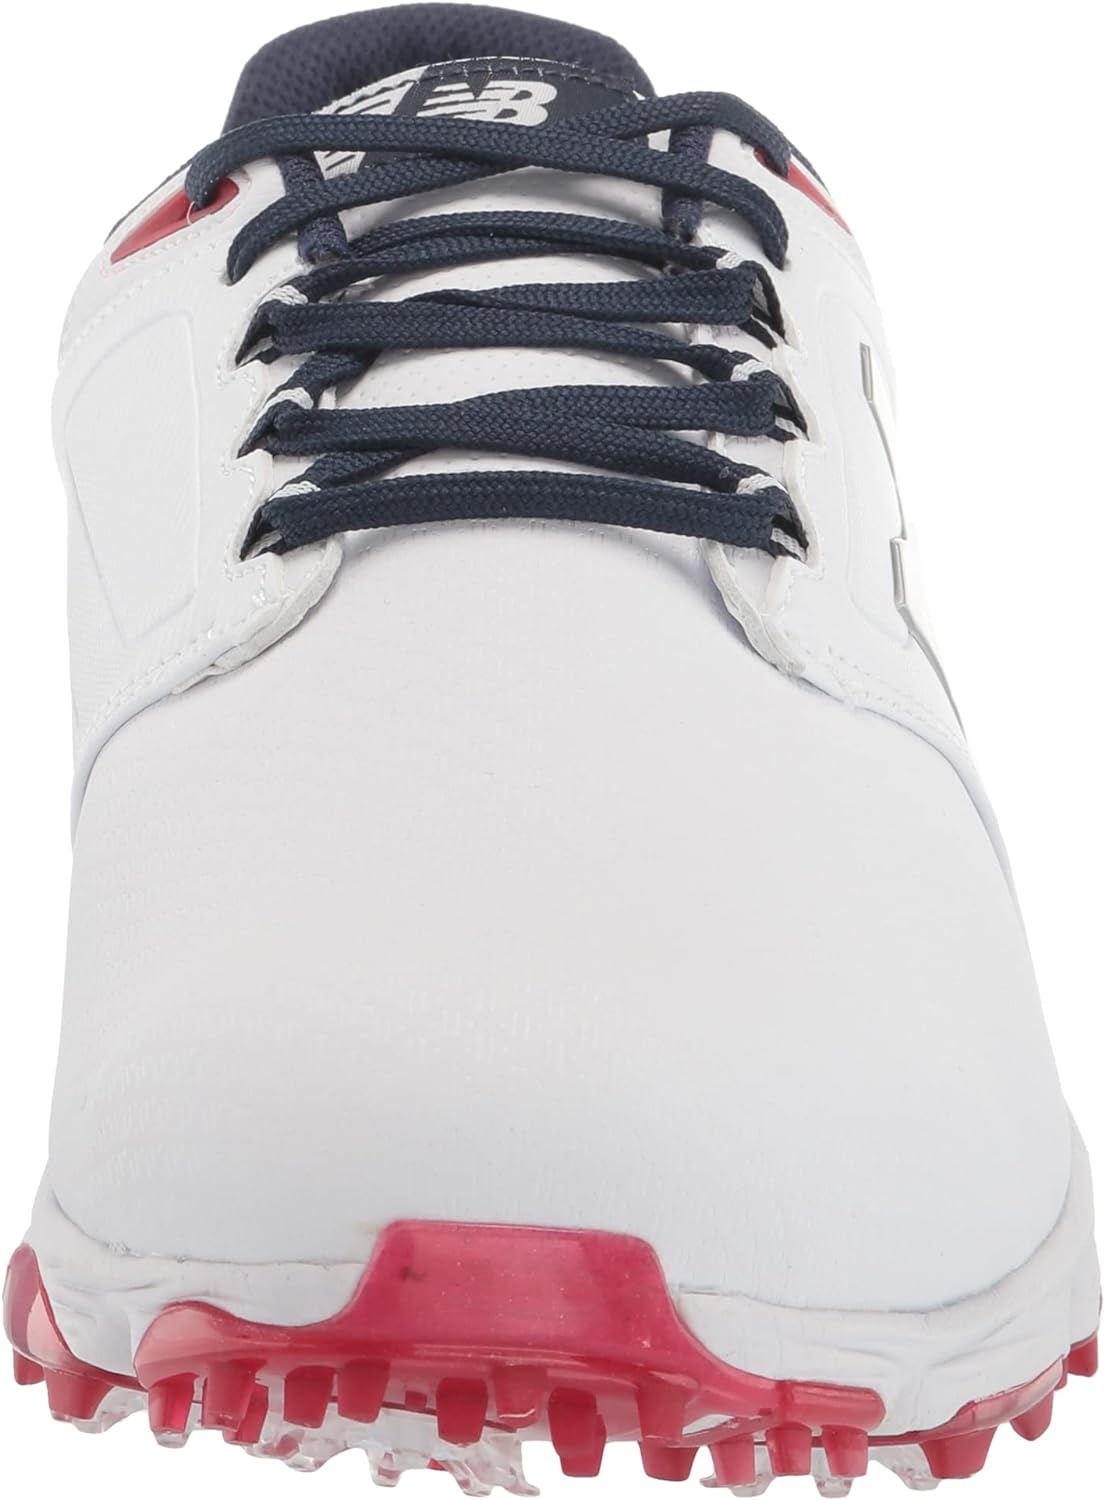 New Balance Men's Striker V3 Golf Shoes White/Blue D 12 - image 2 of 8